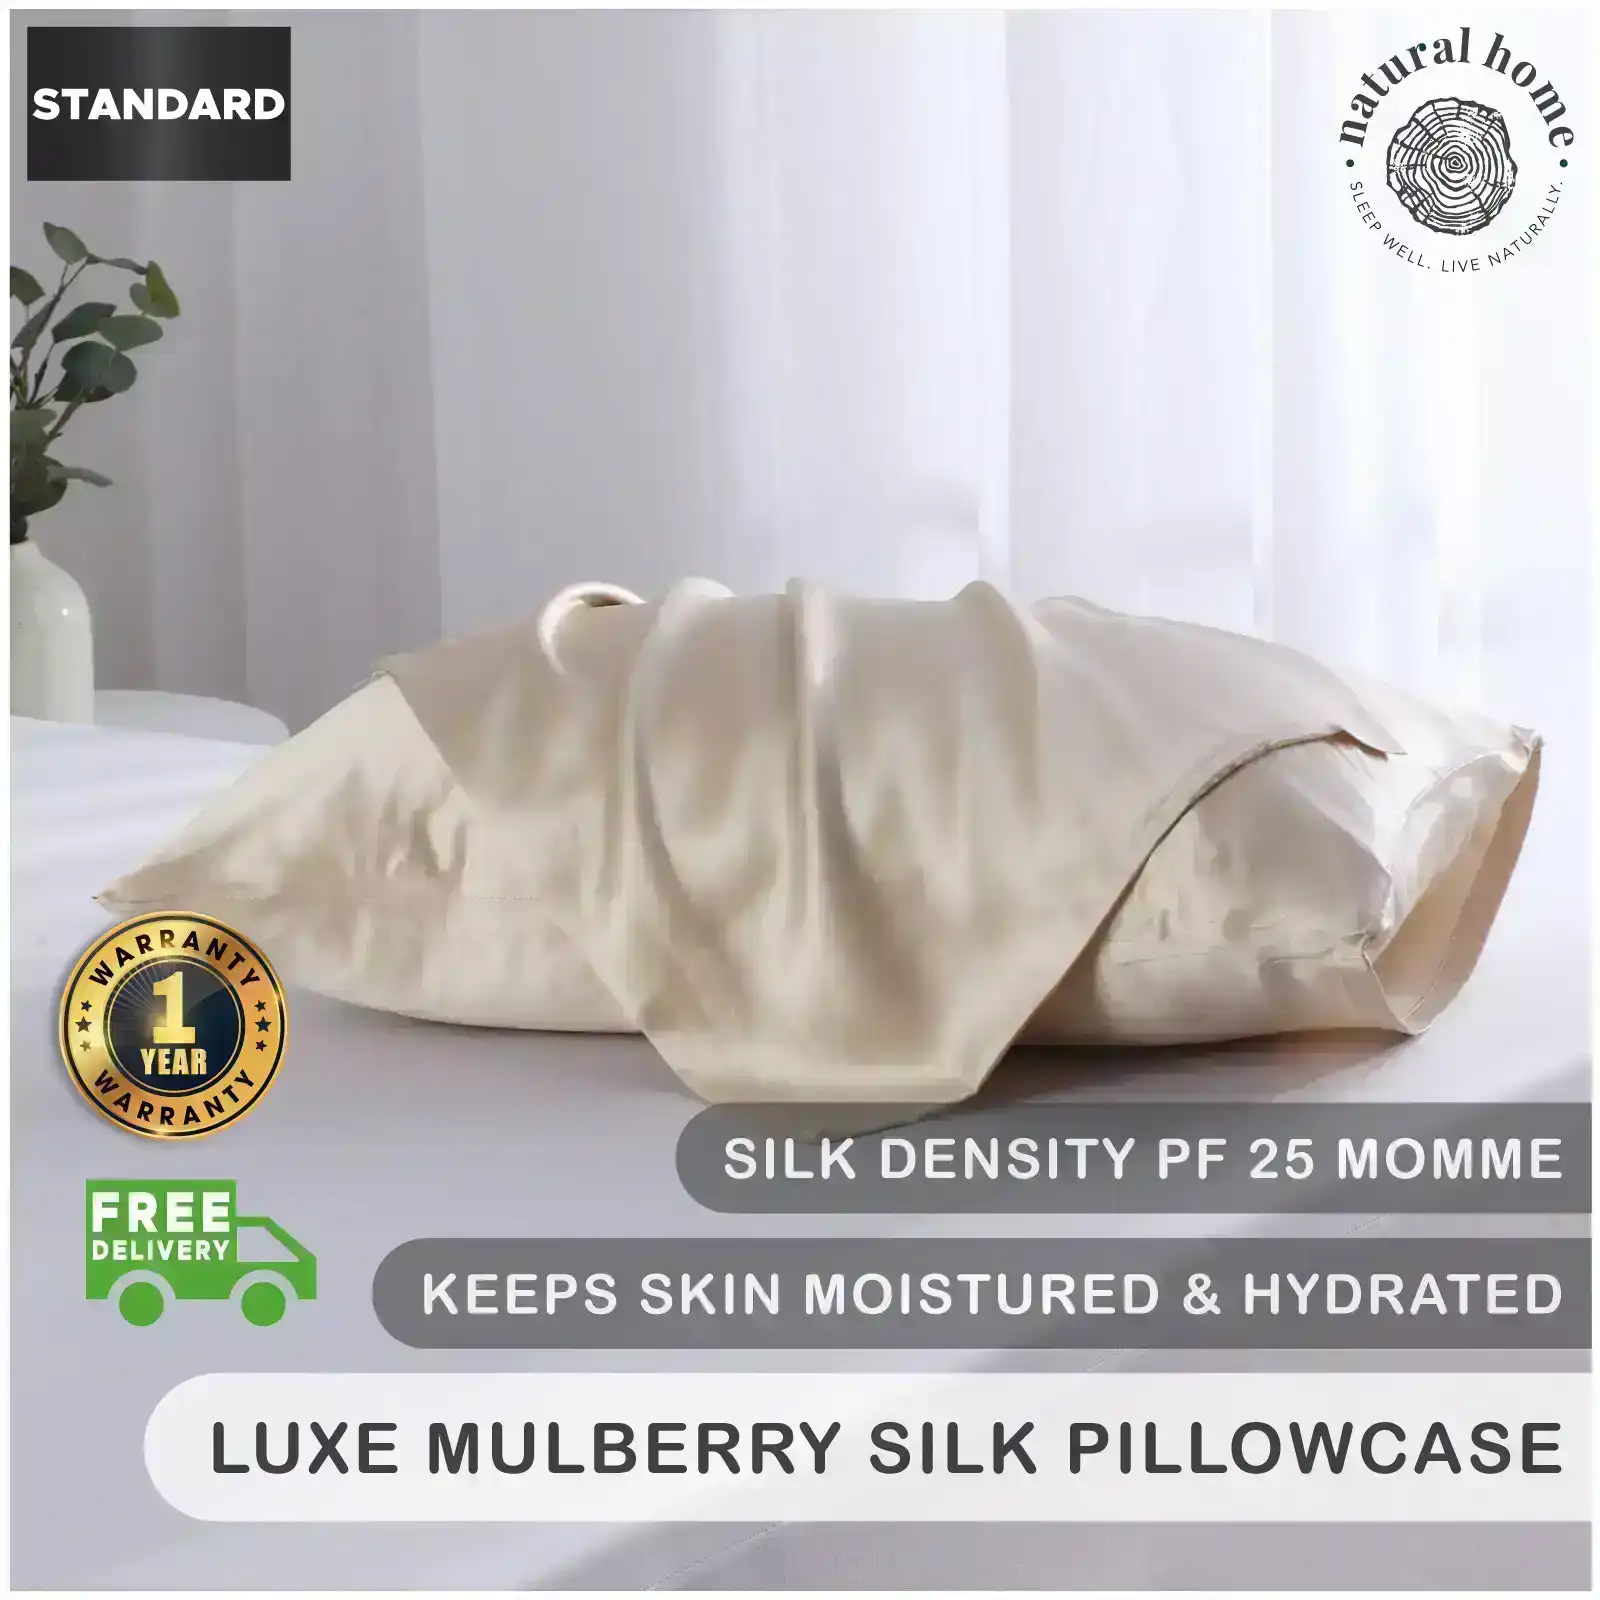 Natural Home Luxe Mulberry Silk Pillowcase 25 Momme Standard Pillowcase 48 x 73cm - Gold